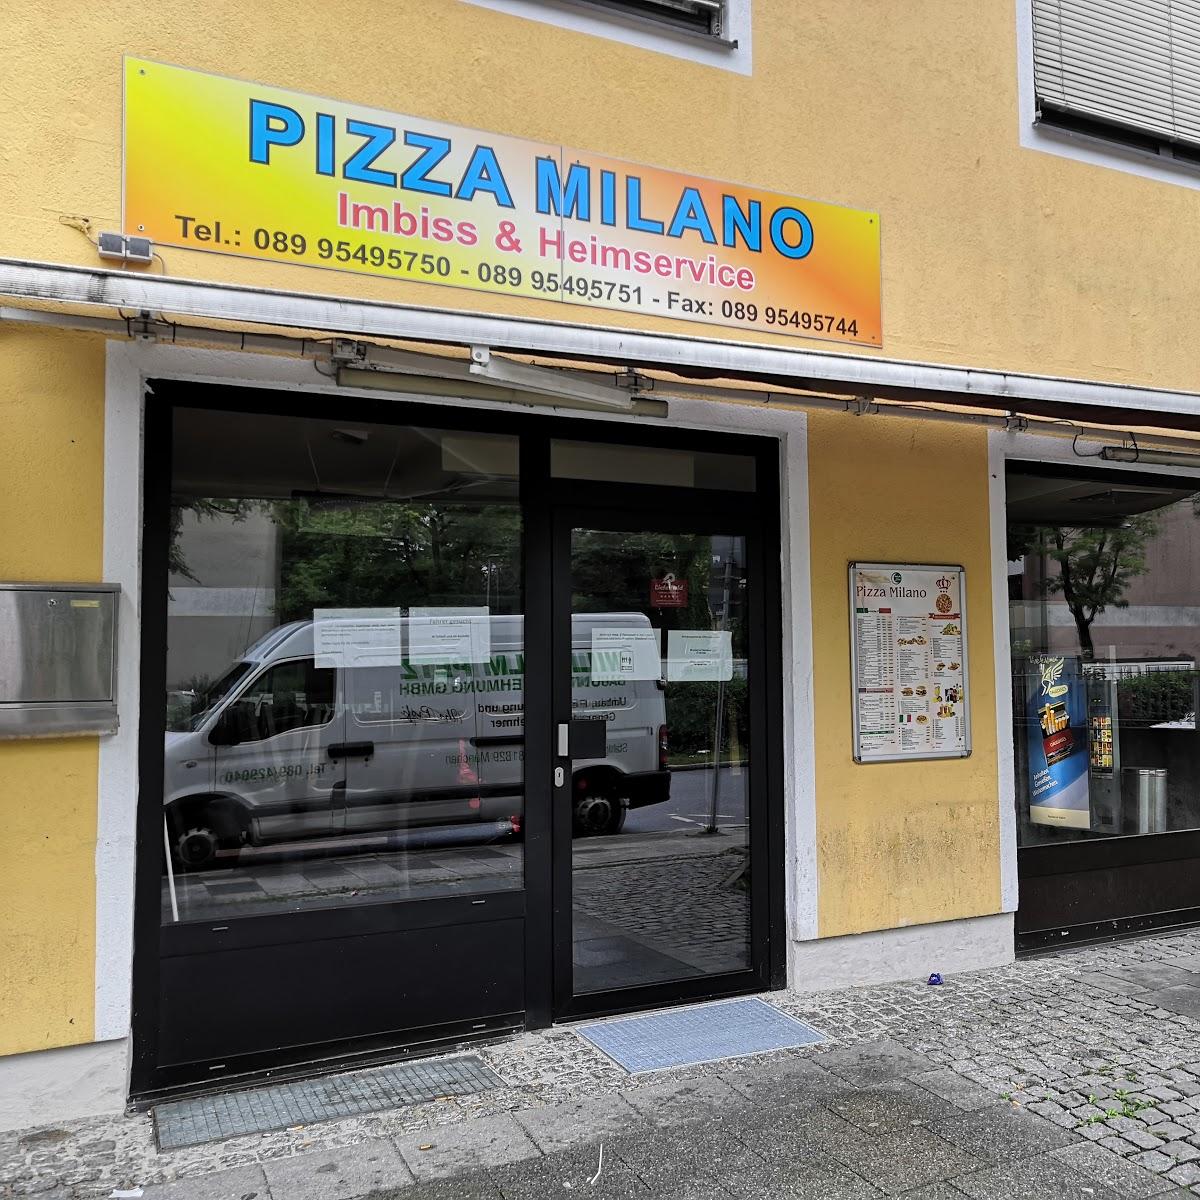 Restaurant "Pizza Milano" in München